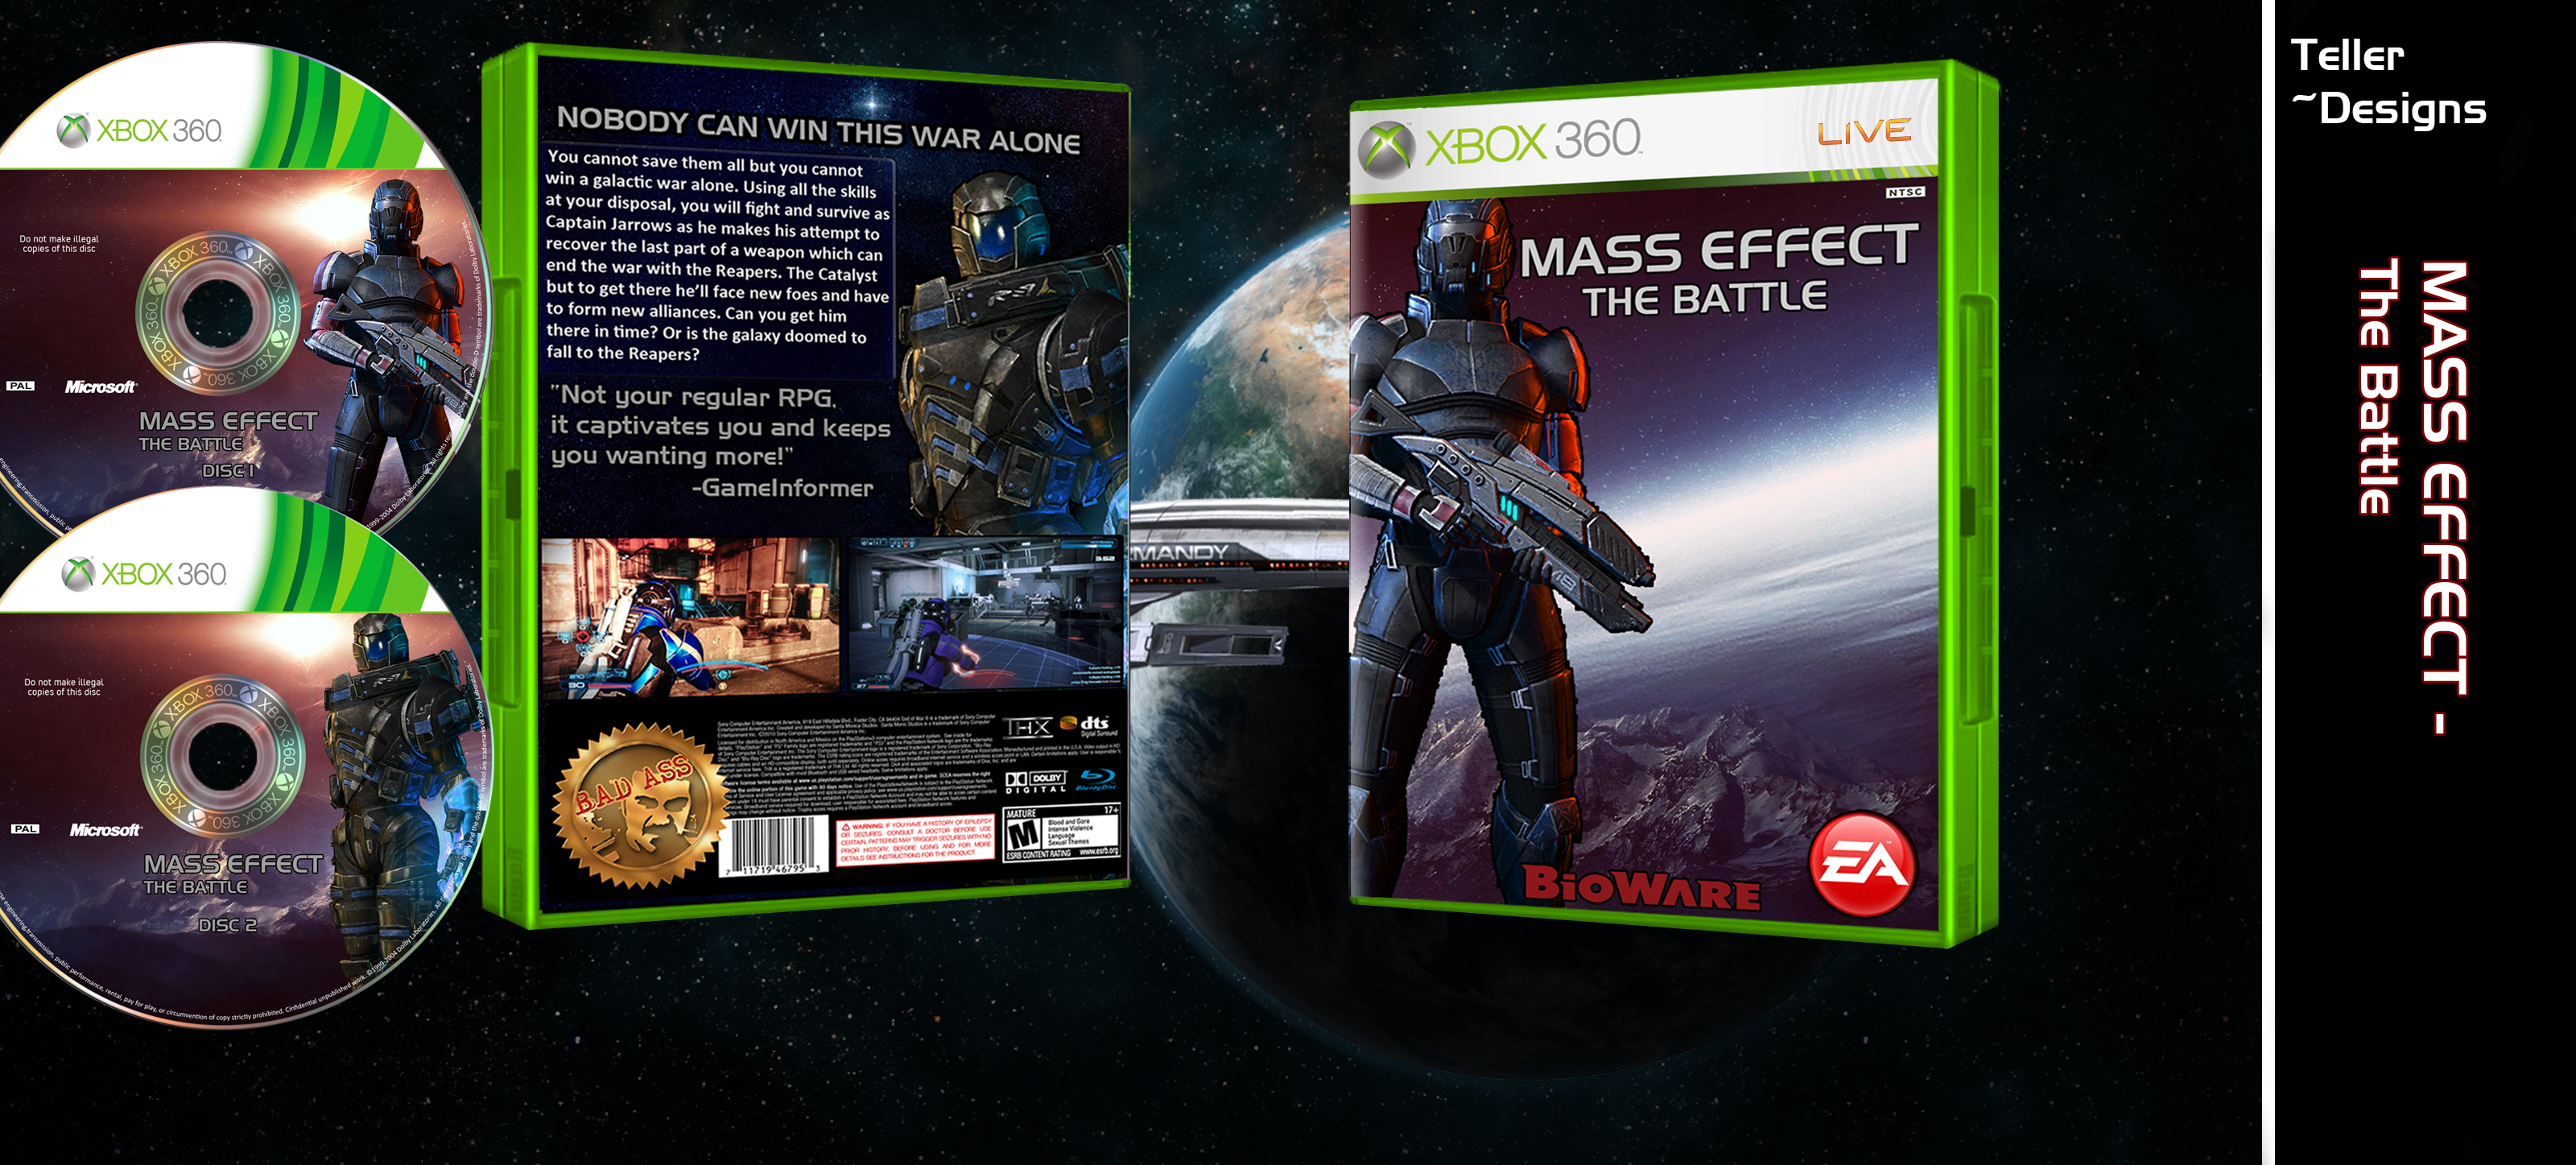 Mass Effect: The Battle box cover